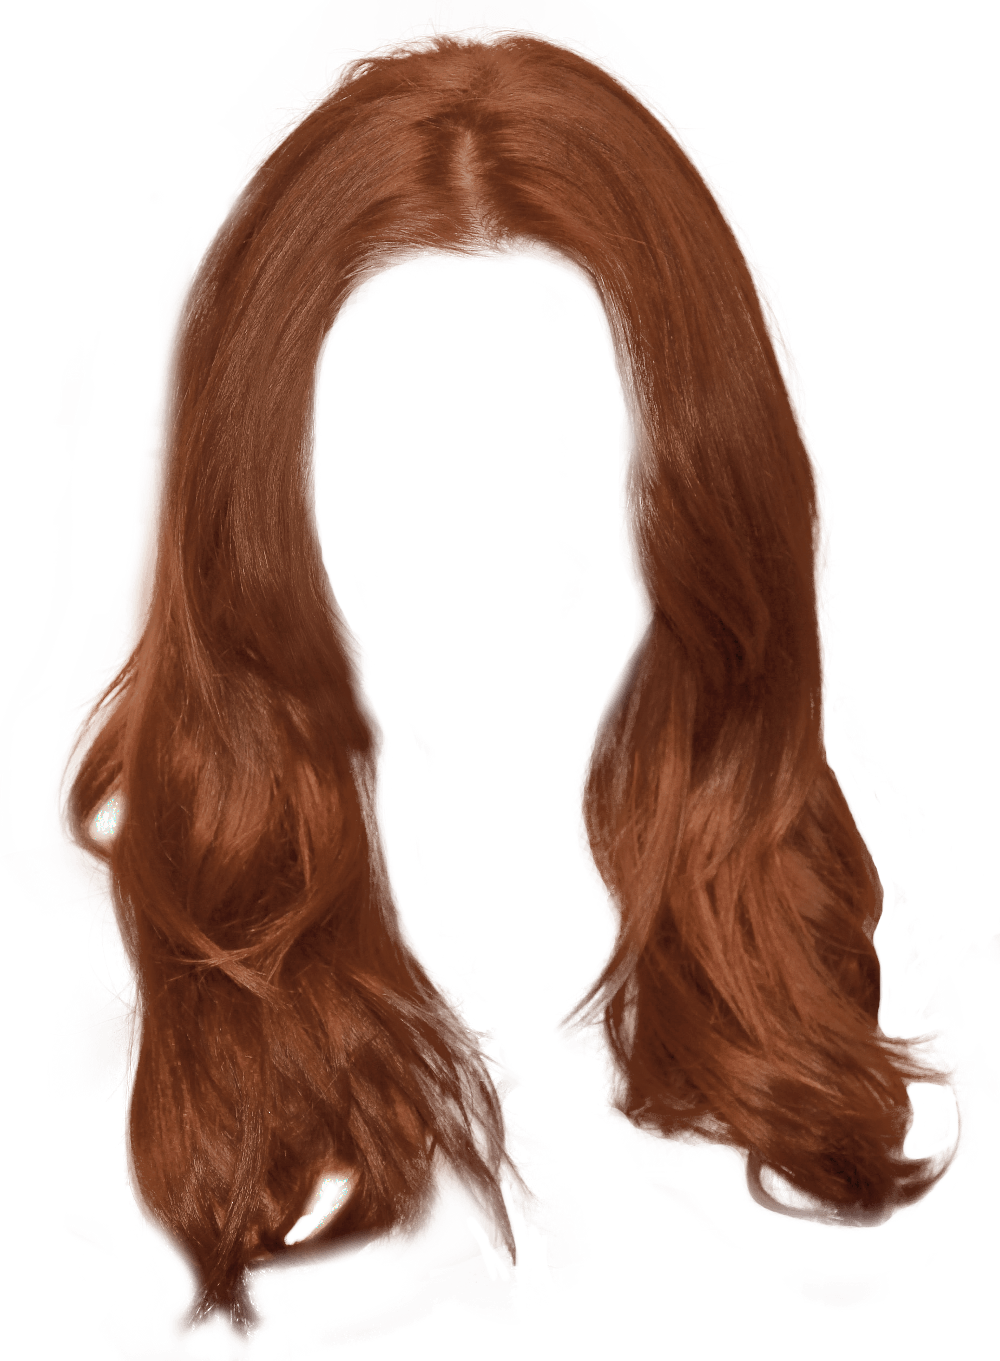 Auburn Wavy Hair Wig Transparent Background PNG image